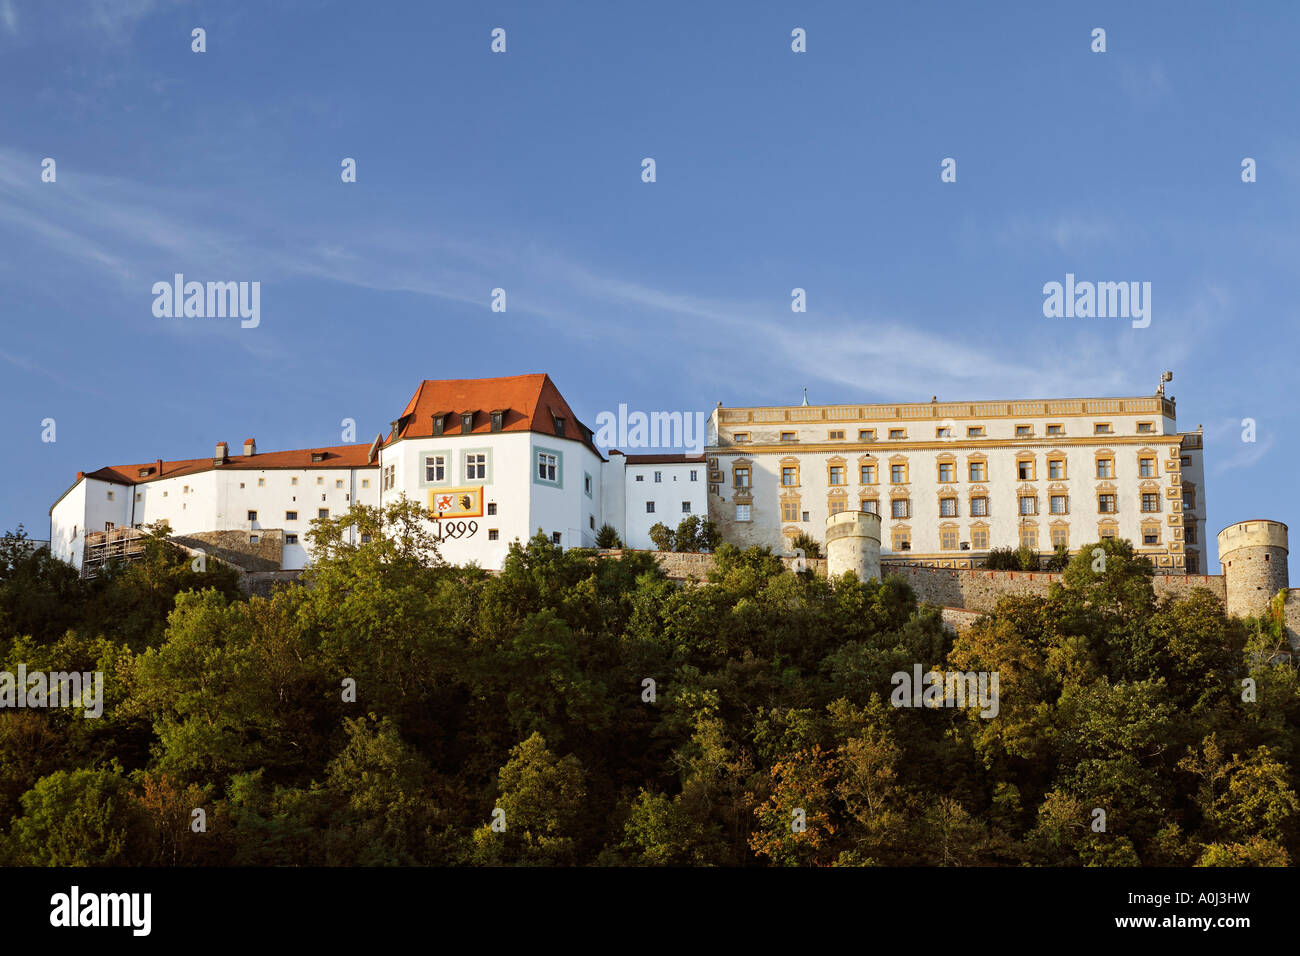 Castle Veste Oberhaus, Passau, Lower Bavaria, Germany Stock Photo